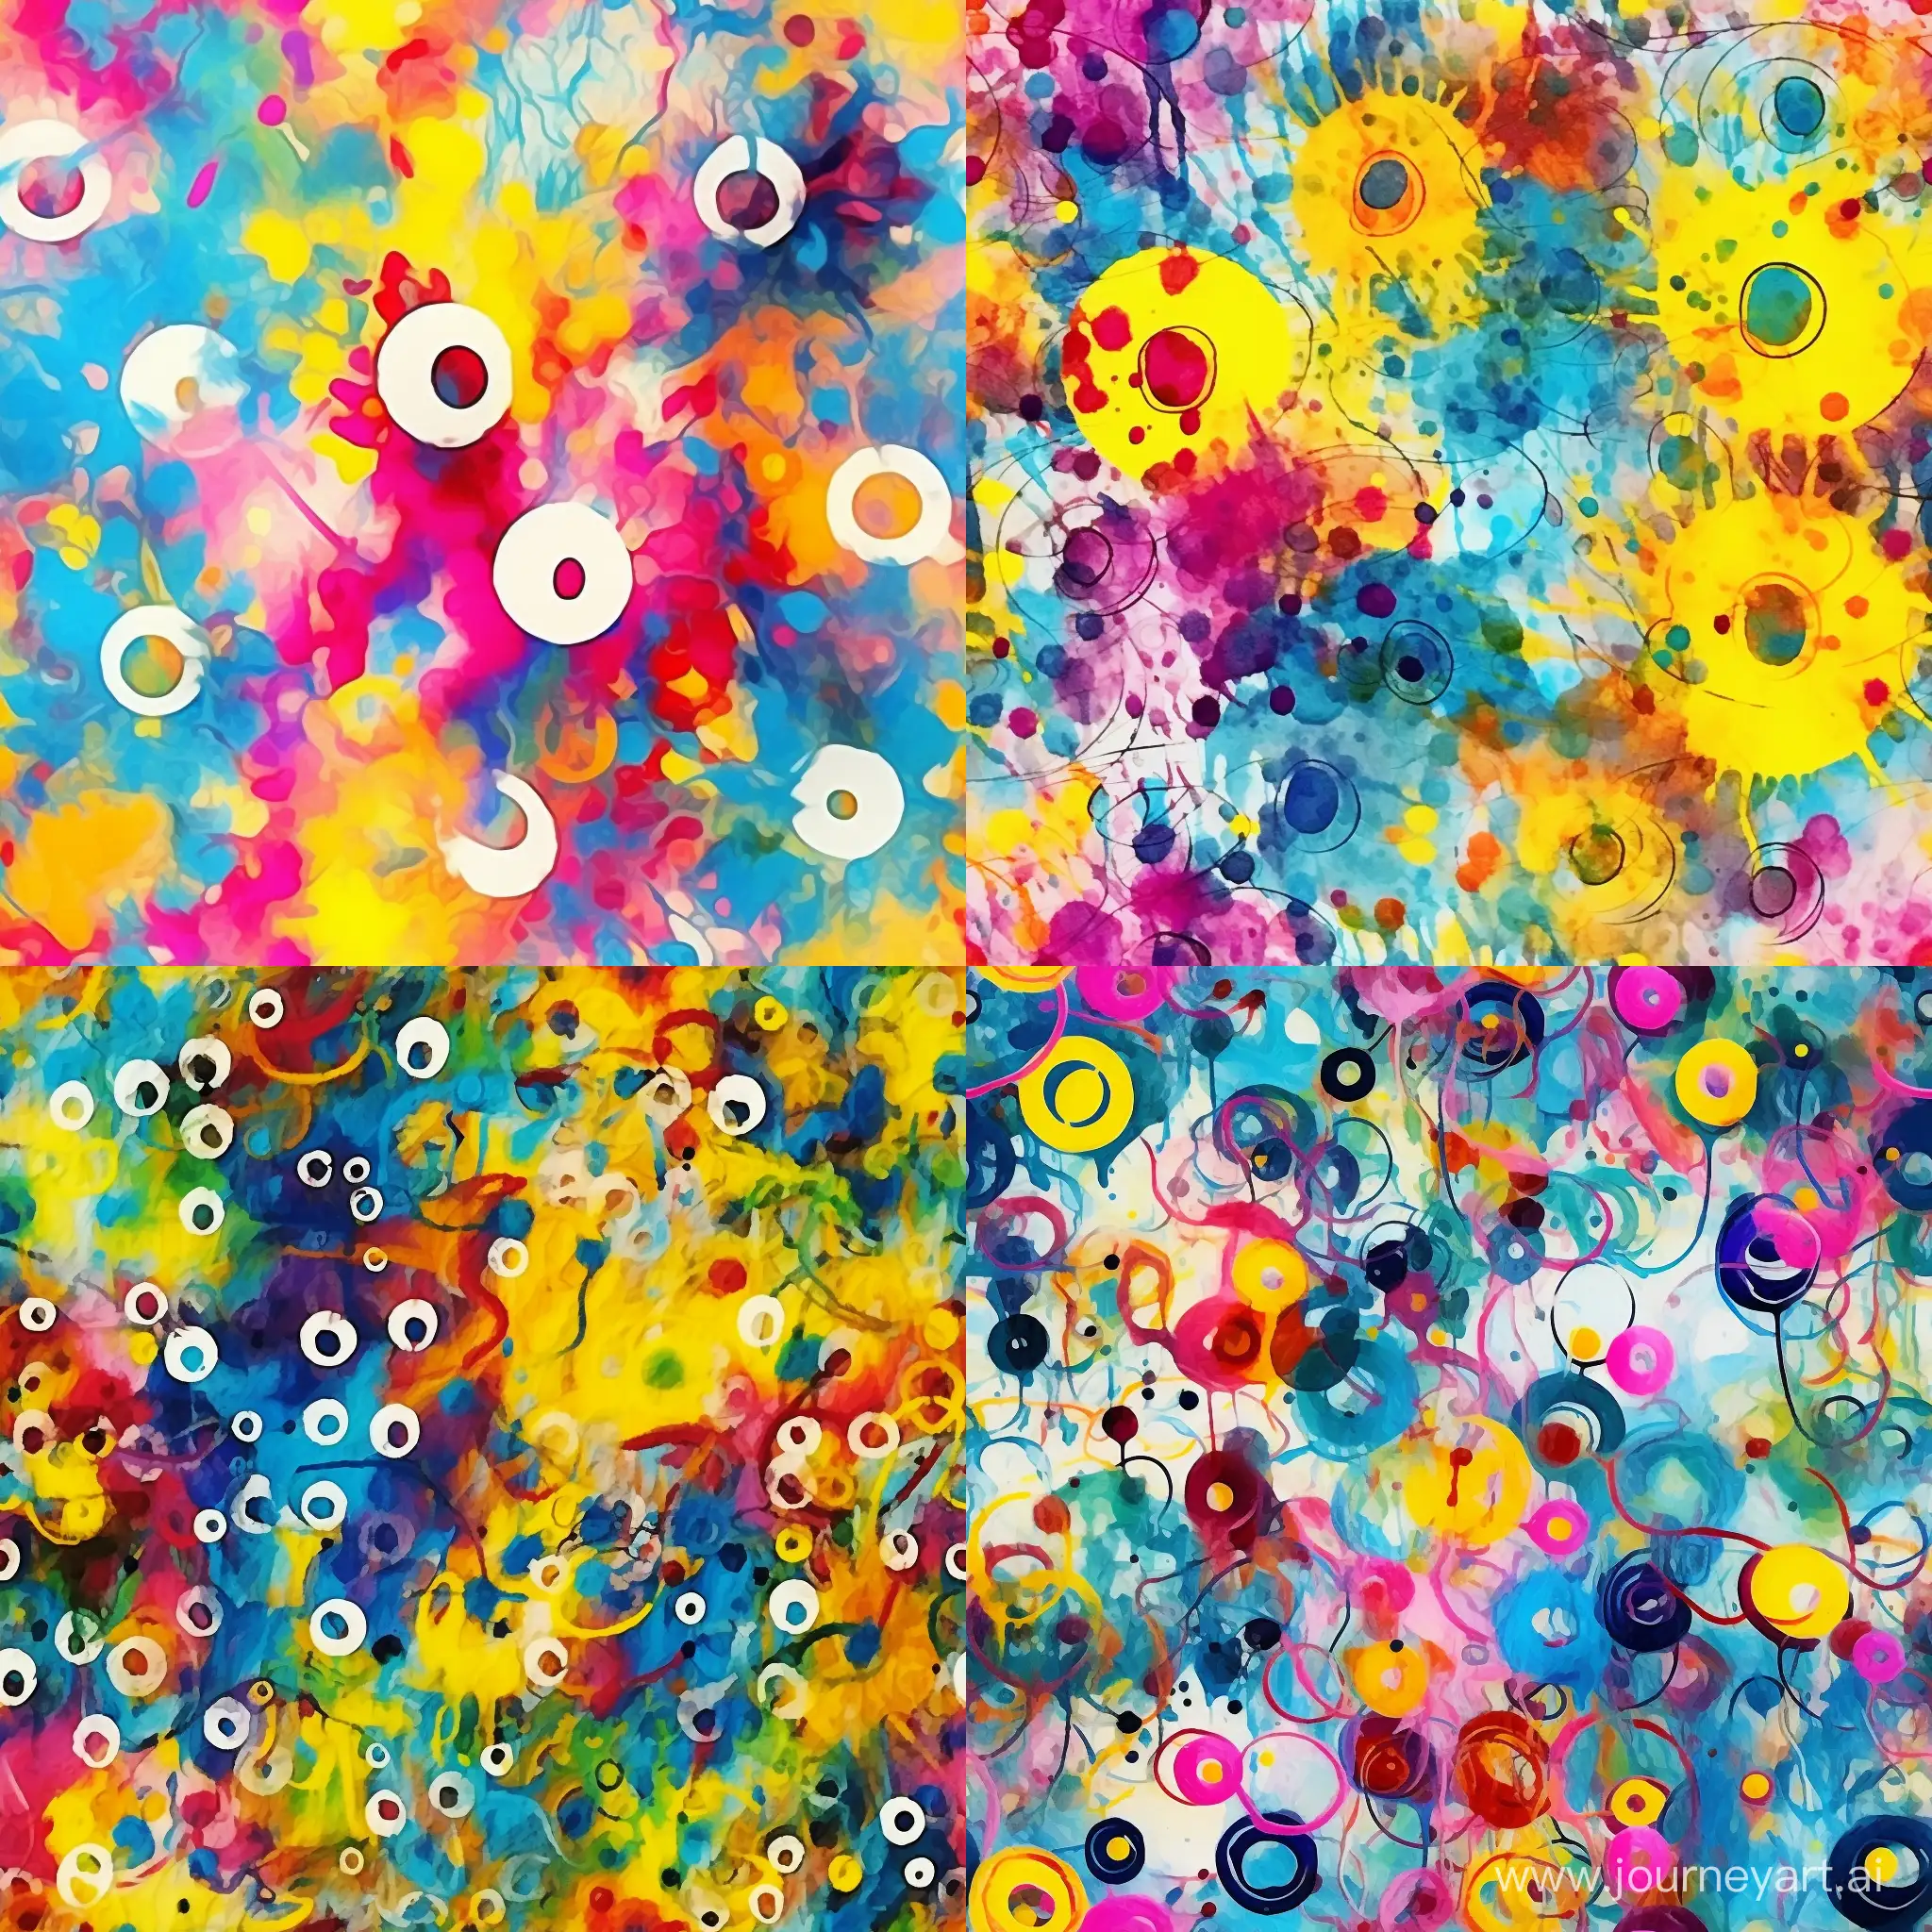 Ethereal-Pop-Art-Joyous-Emojis-Dance-on-Watercolor-Canvas